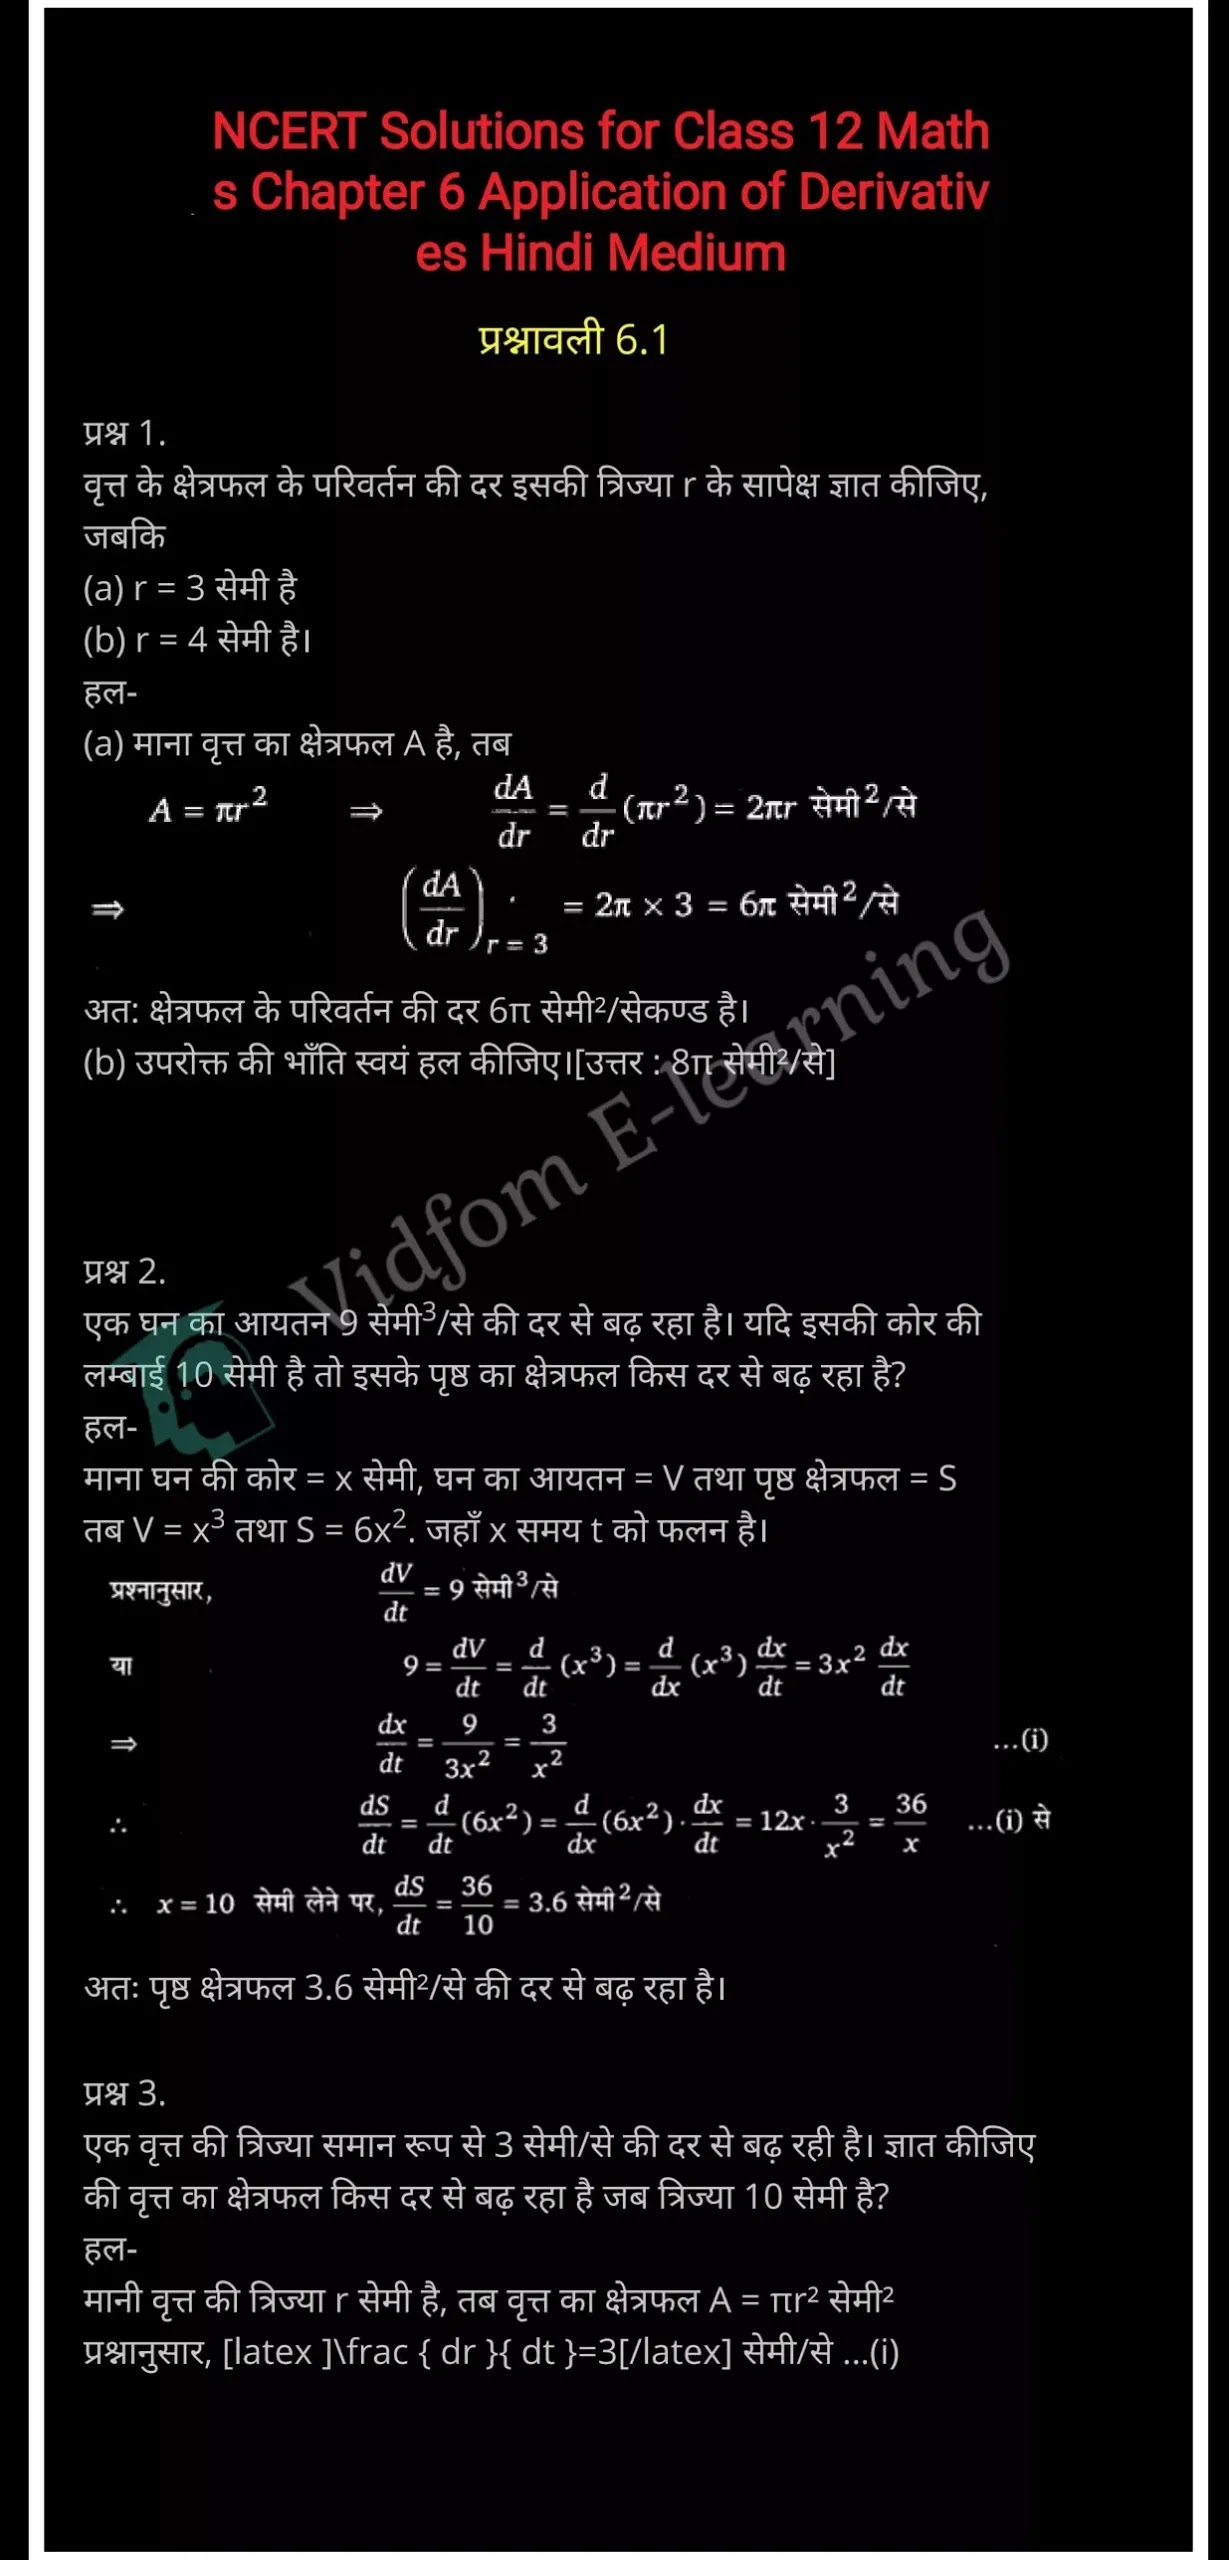 कक्षा 12 गणित  के नोट्स  हिंदी में एनसीईआरटी समाधान,     class 12 Maths Chapter 6,   class 12 Maths Chapter 6 ncert solutions in Hindi,   class 12 Maths Chapter 6 notes in hindi,   class 12 Maths Chapter 6 question answer,   class 12 Maths Chapter 6 notes,   class 12 Maths Chapter 6 class 12 Maths Chapter 6 in  hindi,    class 12 Maths Chapter 6 important questions in  hindi,   class 12 Maths Chapter 6 notes in hindi,    class 12 Maths Chapter 6 test,   class 12 Maths Chapter 6 pdf,   class 12 Maths Chapter 6 notes pdf,   class 12 Maths Chapter 6 exercise solutions,   class 12 Maths Chapter 6 notes study rankers,   class 12 Maths Chapter 6 notes,    class 12 Maths Chapter 6  class 12  notes pdf,   class 12 Maths Chapter 6 class 12  notes  ncert,   class 12 Maths Chapter 6 class 12 pdf,   class 12 Maths Chapter 6  book,   class 12 Maths Chapter 6 quiz class 12  ,    10  th class 12 Maths Chapter 6  book up board,   up board 10  th class 12 Maths Chapter 6 notes,  class 12 Maths,   class 12 Maths ncert solutions in Hindi,   class 12 Maths notes in hindi,   class 12 Maths question answer,   class 12 Maths notes,  class 12 Maths class 12 Maths Chapter 6 in  hindi,    class 12 Maths important questions in  hindi,   class 12 Maths notes in hindi,    class 12 Maths test,  class 12 Maths class 12 Maths Chapter 6 pdf,   class 12 Maths notes pdf,   class 12 Maths exercise solutions,   class 12 Maths,  class 12 Maths notes study rankers,   class 12 Maths notes,  class 12 Maths notes,   class 12 Maths  class 12  notes pdf,   class 12 Maths class 12  notes  ncert,   class 12 Maths class 12 pdf,   class 12 Maths  book,  class 12 Maths quiz class 12  ,  10  th class 12 Maths    book up board,    up board 10  th class 12 Maths notes,      कक्षा 12 गणित अध्याय 6 ,  कक्षा 12 गणित, कक्षा 12 गणित अध्याय 6  के नोट्स हिंदी में,  कक्षा 12 का हिंदी अध्याय 6 का प्रश्न उत्तर,  कक्षा 12 गणित अध्याय 6  के नोट्स,  10 कक्षा गणित  हिंदी में, कक्षा 12 गणित अध्याय 6  हिंदी में,  कक्षा 12 गणित अध्याय 6  महत्वपूर्ण प्रश्न हिंदी में, कक्षा 12   हिंदी के नोट्स  हिंदी में, गणित हिंदी में  कक्षा 12 नोट्स pdf,    गणित हिंदी में  कक्षा 12 नोट्स 2021 ncert,   गणित हिंदी  कक्षा 12 pdf,   गणित हिंदी में  पुस्तक,   गणित हिंदी में की बुक,   गणित हिंदी में  प्रश्नोत्तरी class 12 ,  बिहार बोर्ड   पुस्तक 12वीं हिंदी नोट्स,    गणित कक्षा 12 नोट्स 2021 ncert,   गणित  कक्षा 12 pdf,   गणित  पुस्तक,   गणित  प्रश्नोत्तरी class 12, कक्षा 12 गणित,  कक्षा 12 गणित  के नोट्स हिंदी में,  कक्षा 12 का हिंदी का प्रश्न उत्तर,  कक्षा 12 गणित  के नोट्स,  10 कक्षा हिंदी 2021  हिंदी में, कक्षा 12 गणित  हिंदी में,  कक्षा 12 गणित  महत्वपूर्ण प्रश्न हिंदी में, कक्षा 12 गणित  नोट्स  हिंदी में,